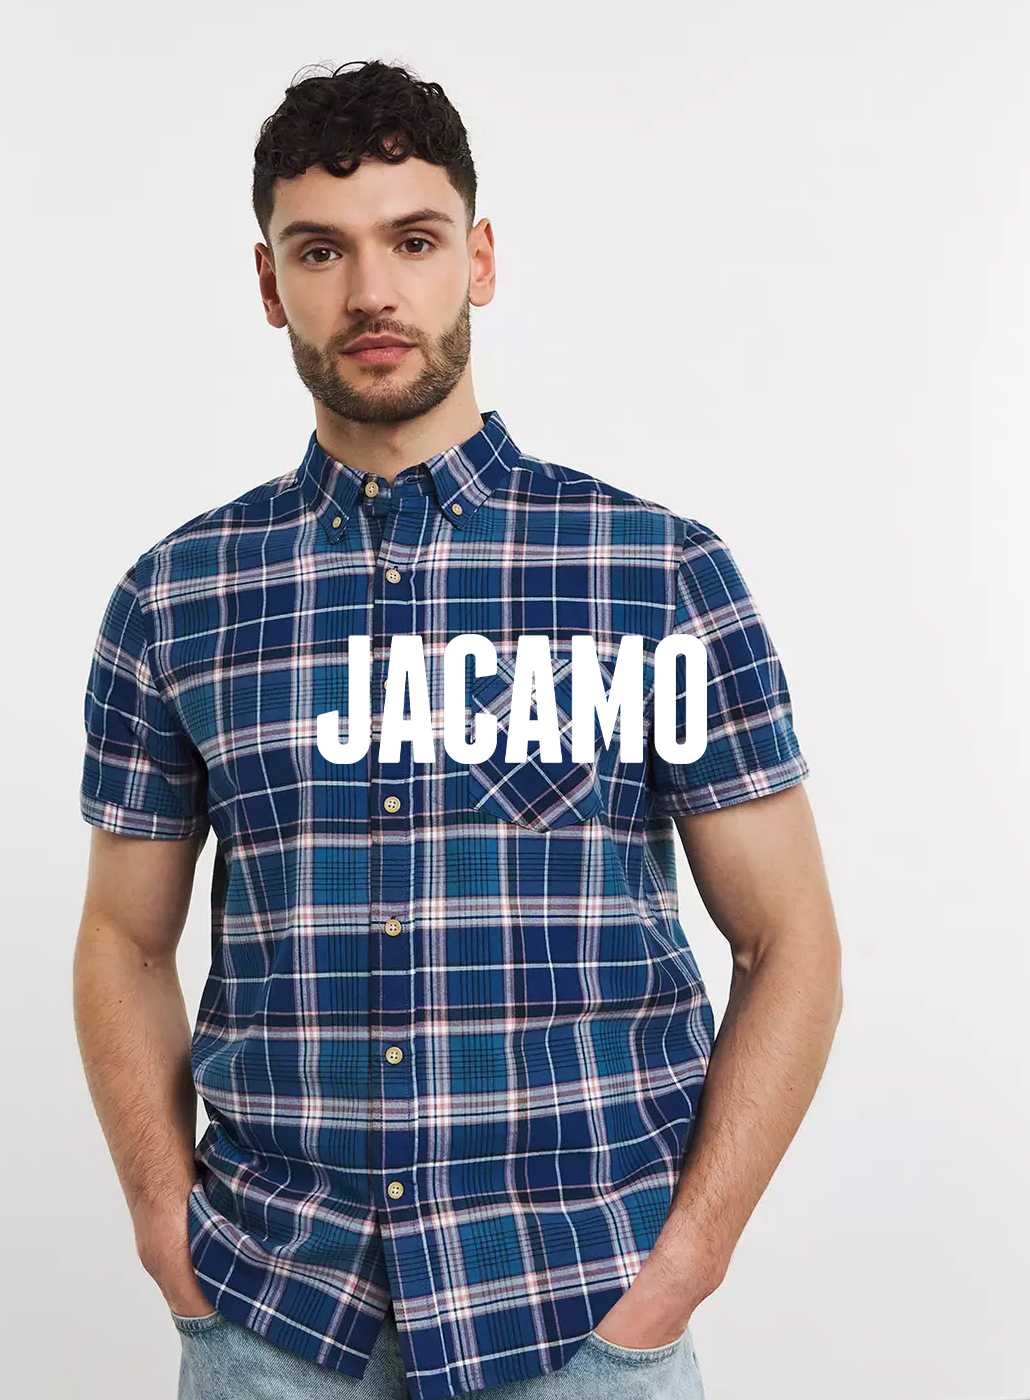 Shop Jacamo.